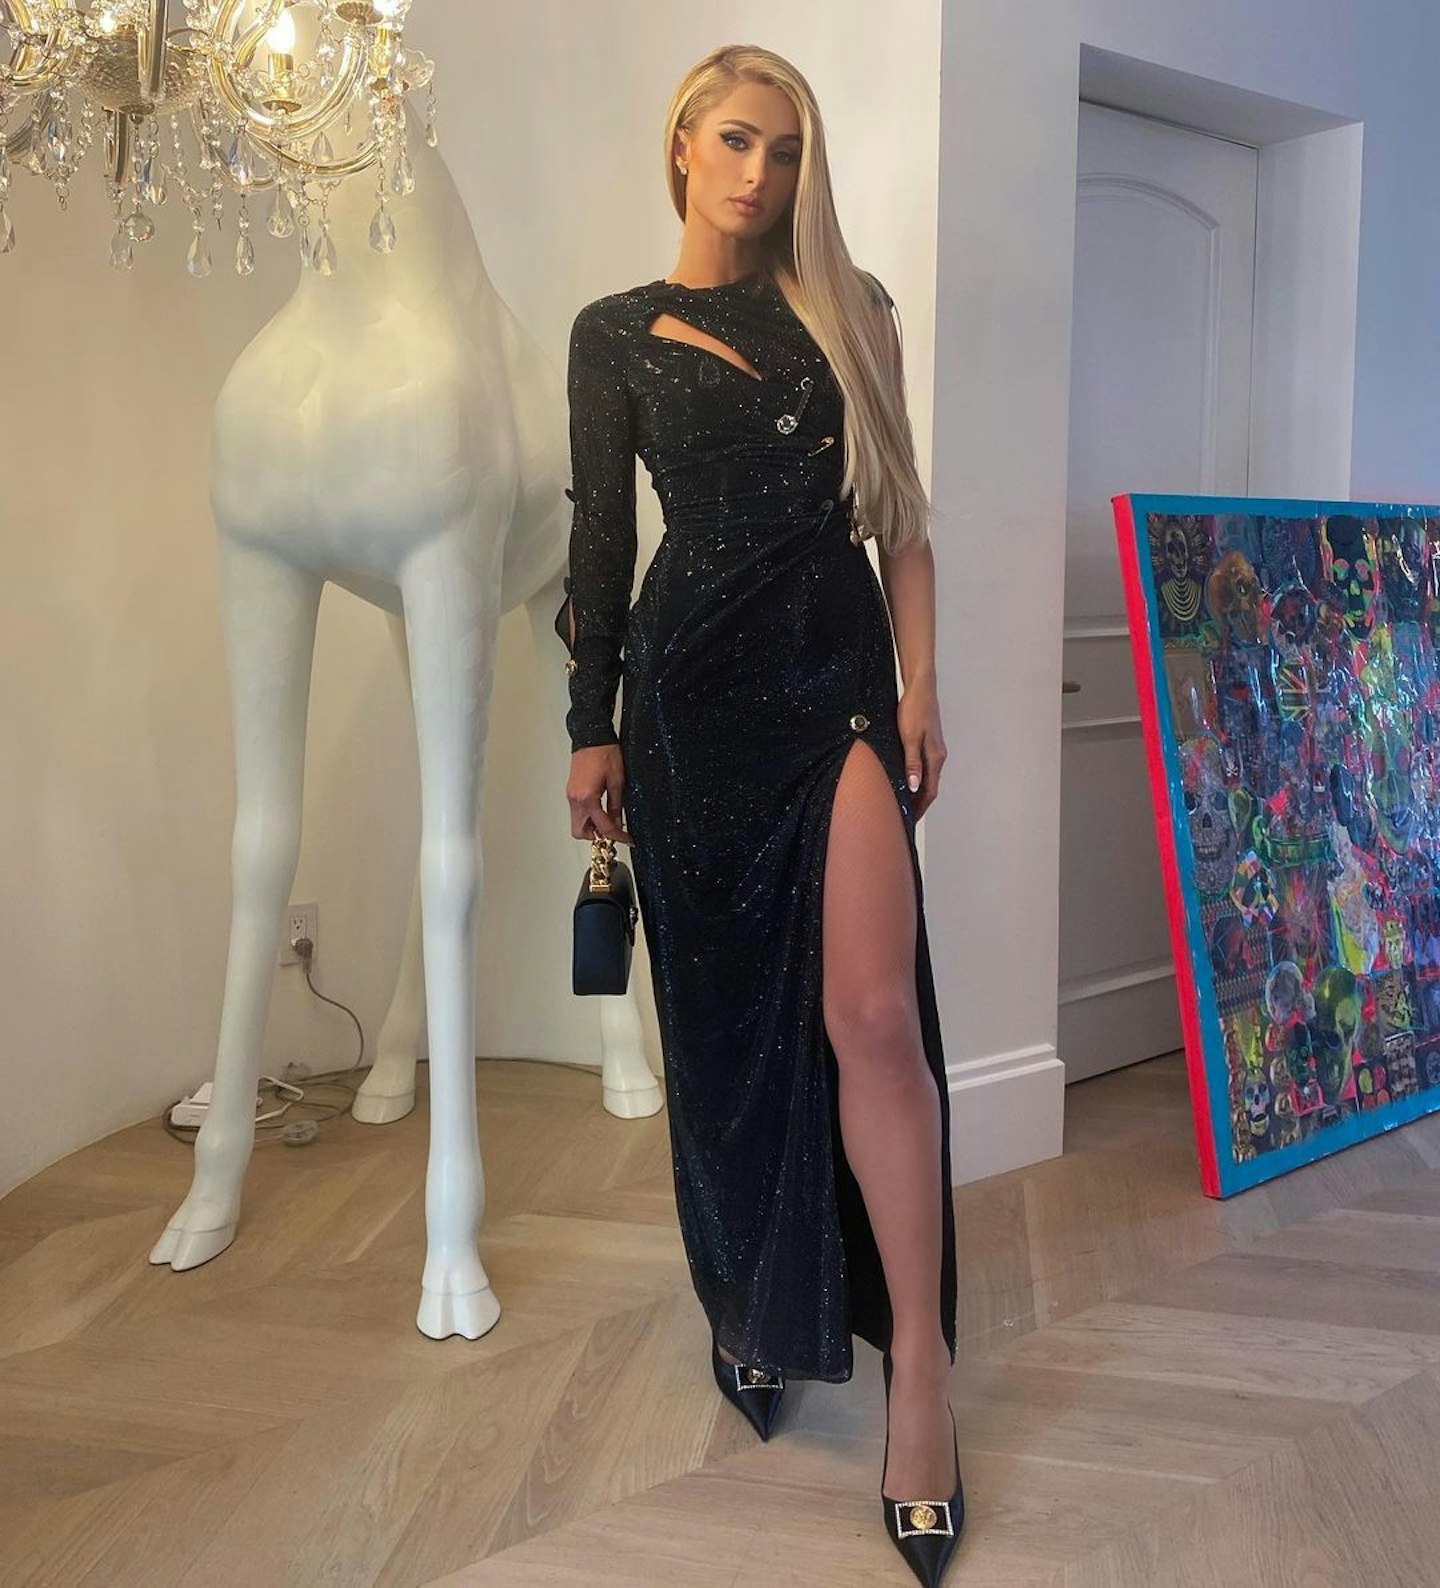 Paris Hilton celebrity wedding outfits controversial 